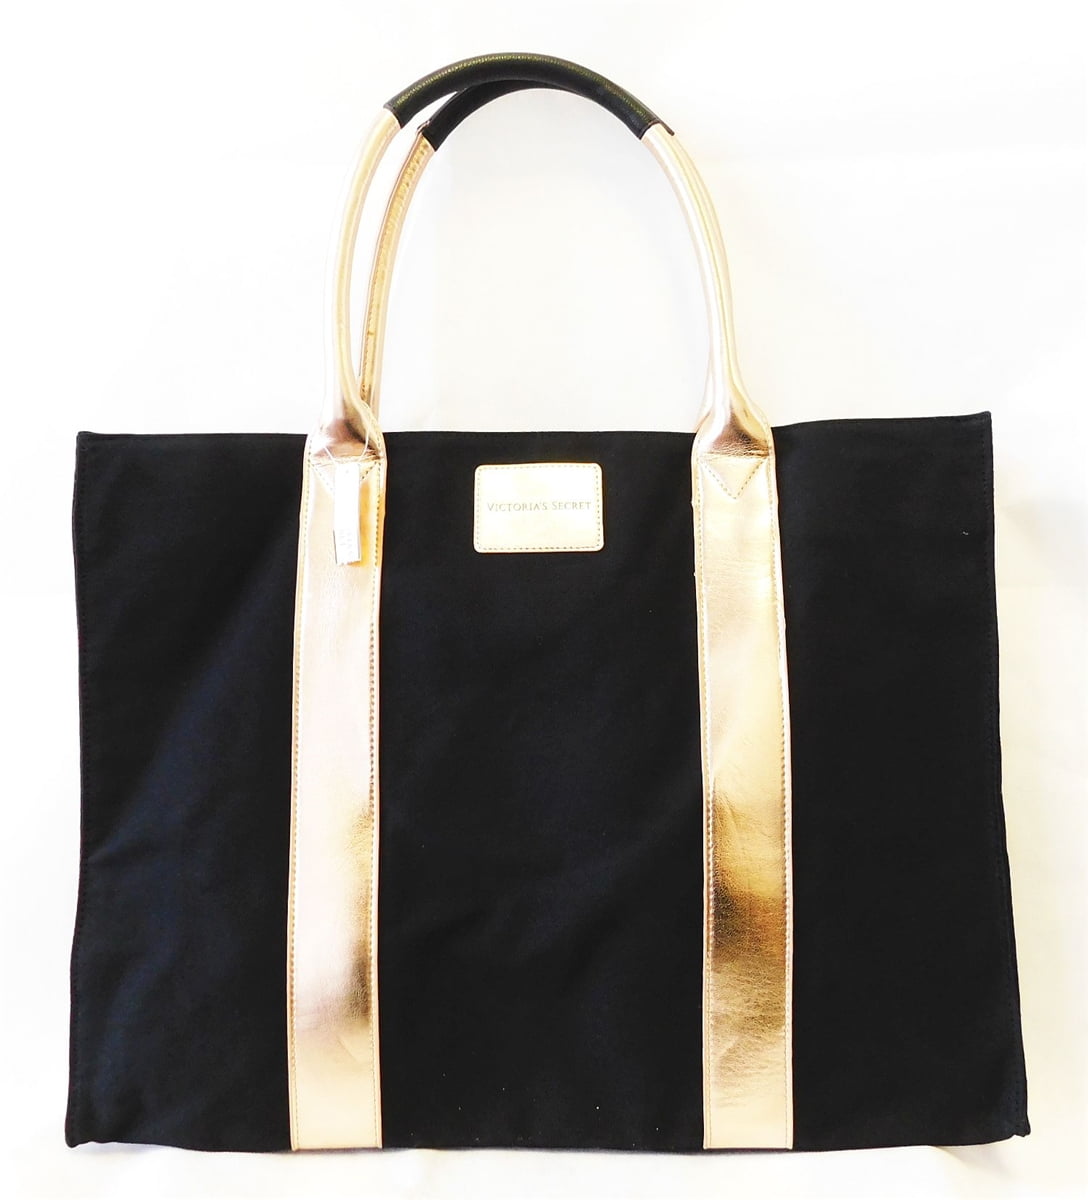 Victoria's Secret | Bags | Victorias Secret Black Gold Strap Purse |  Poshmark